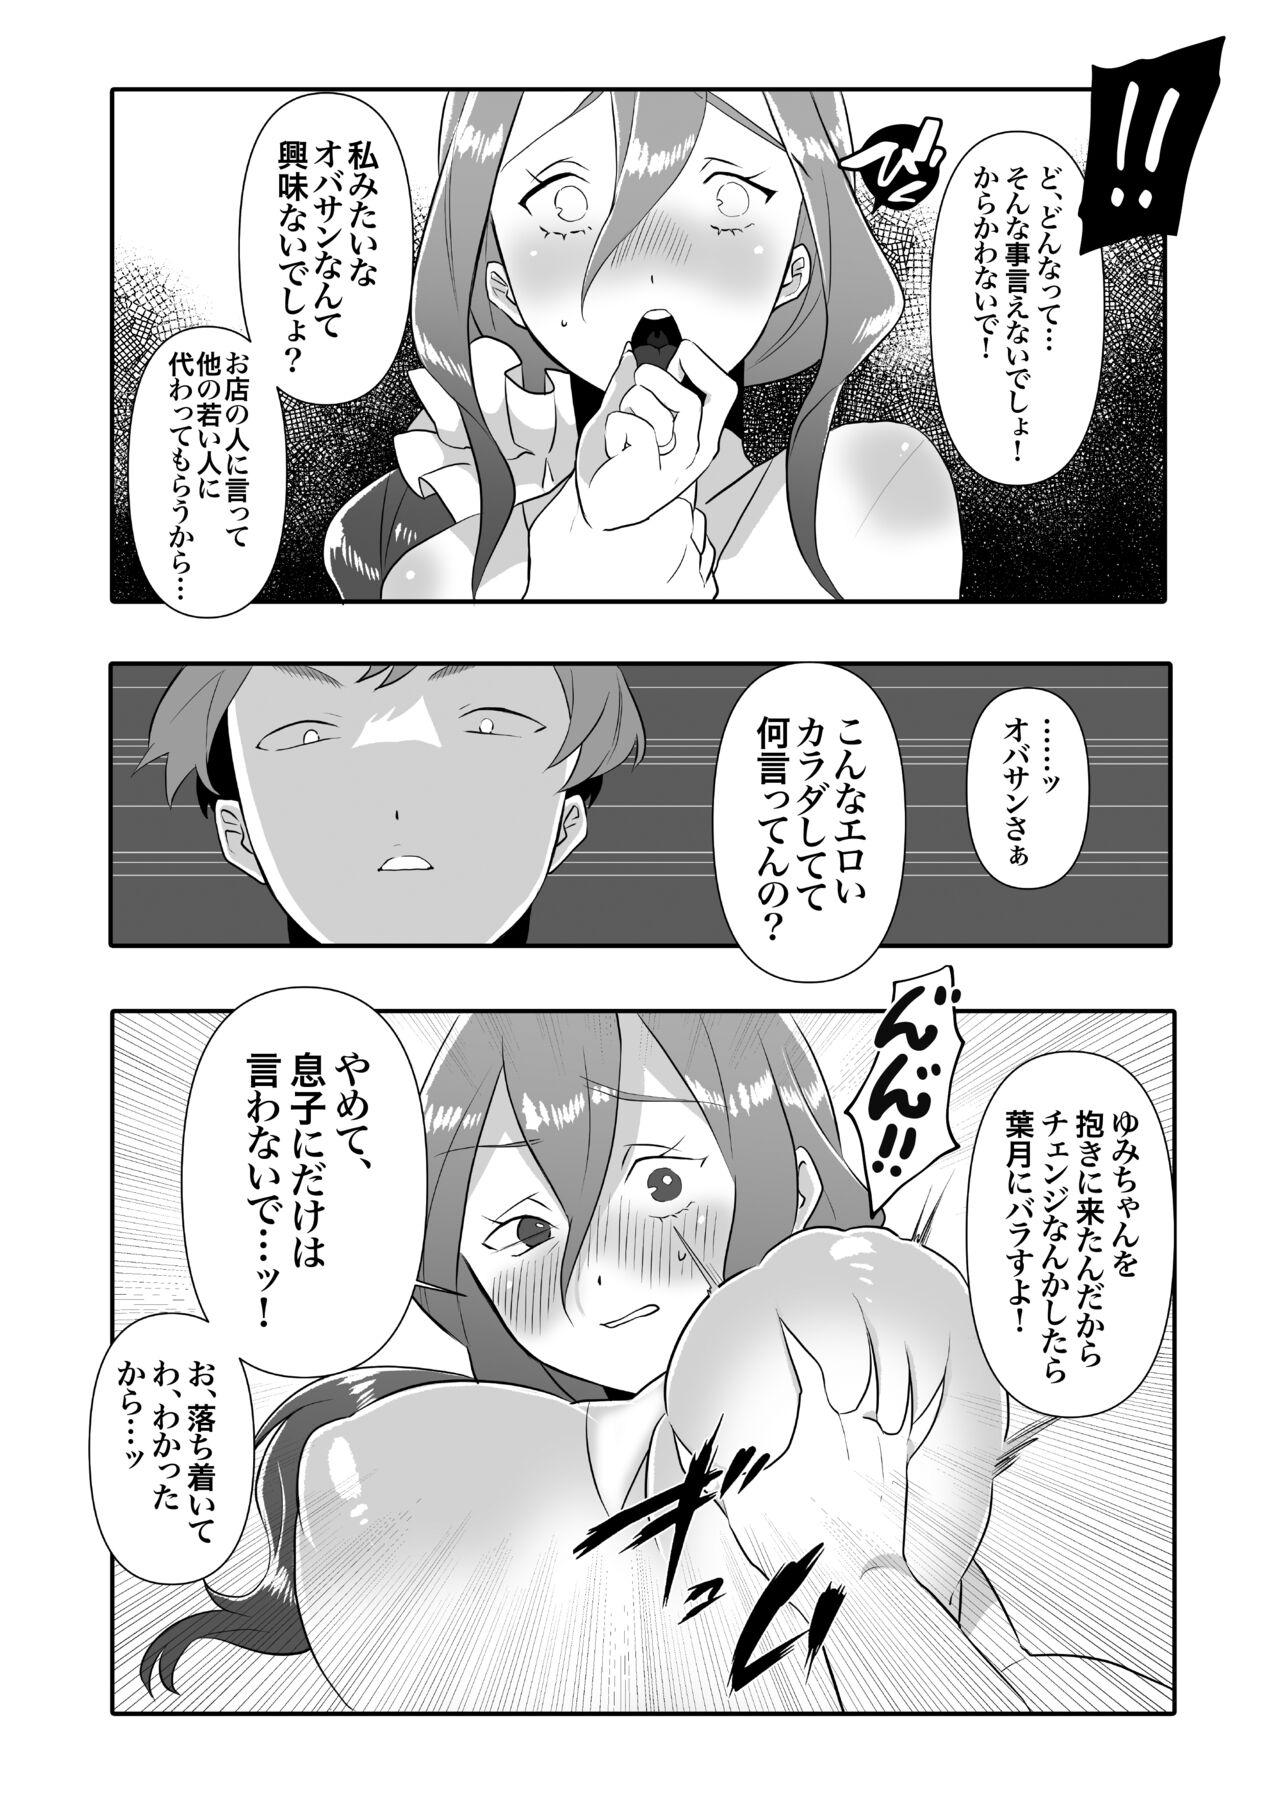 Paja DeliHeal Yondara Tomodachi no Kaa-chan ga Kita. - Original Boobs - Page 10